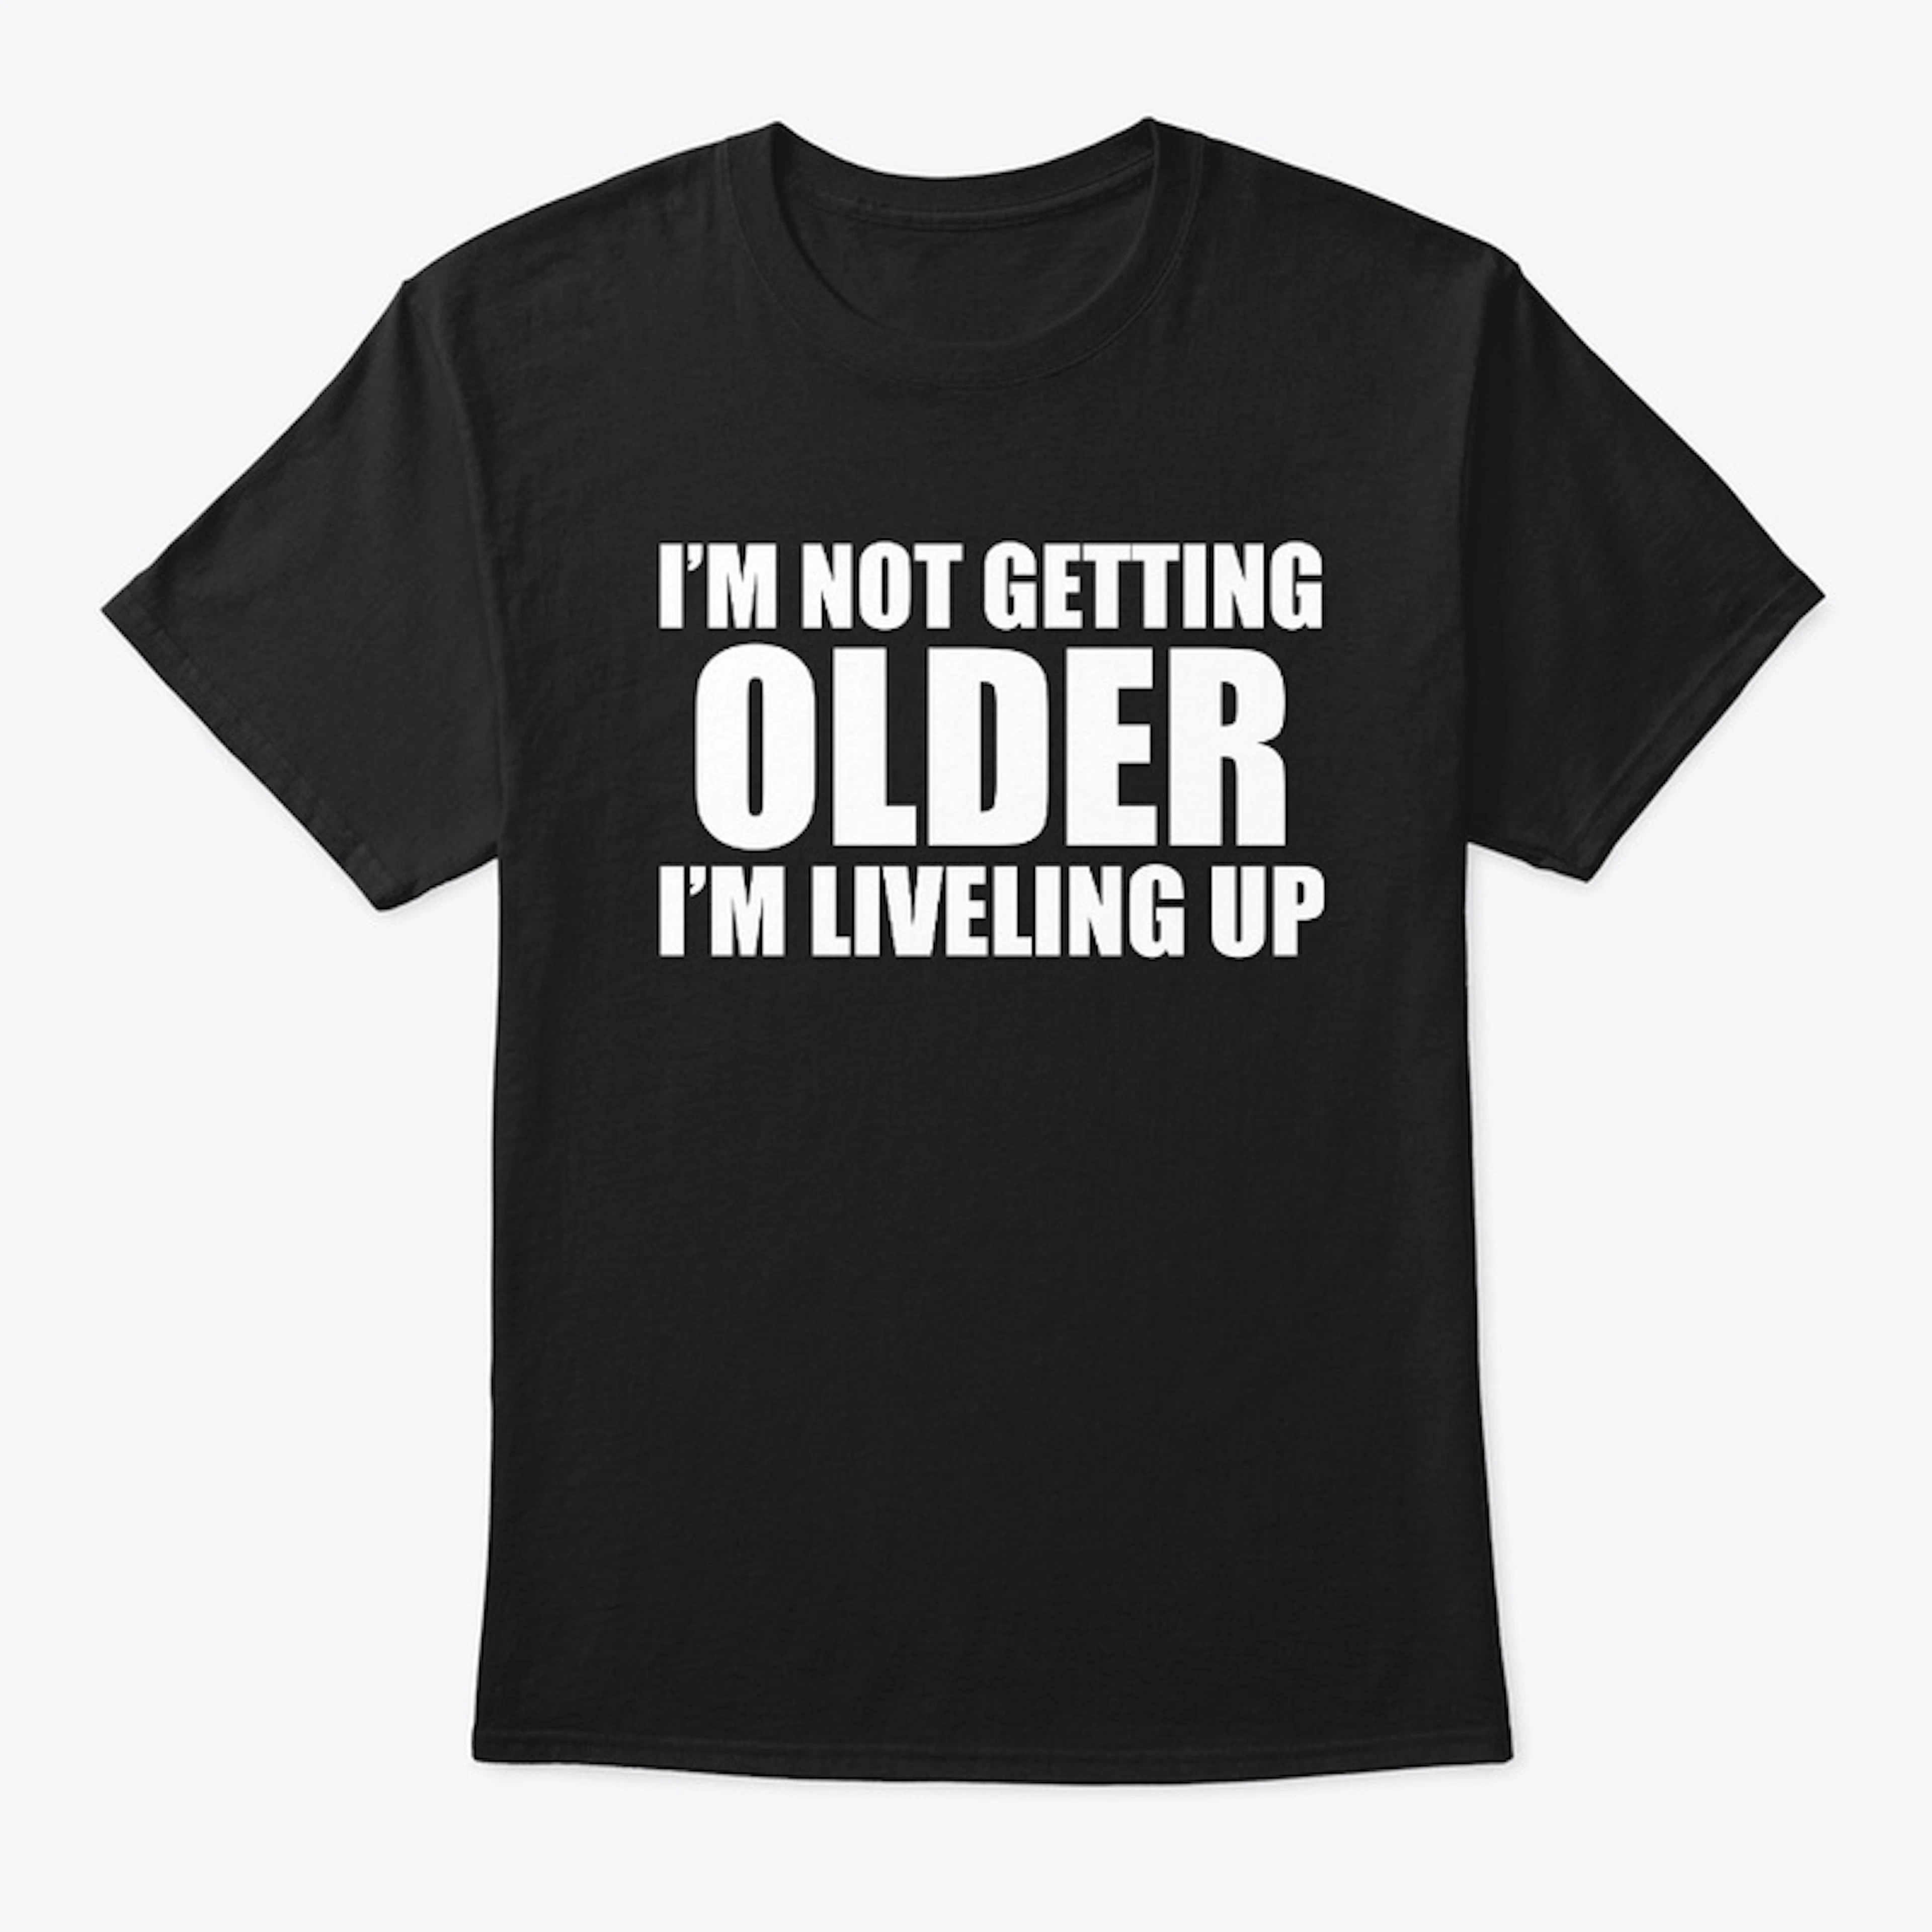 I'm not getting older I'm leveling up